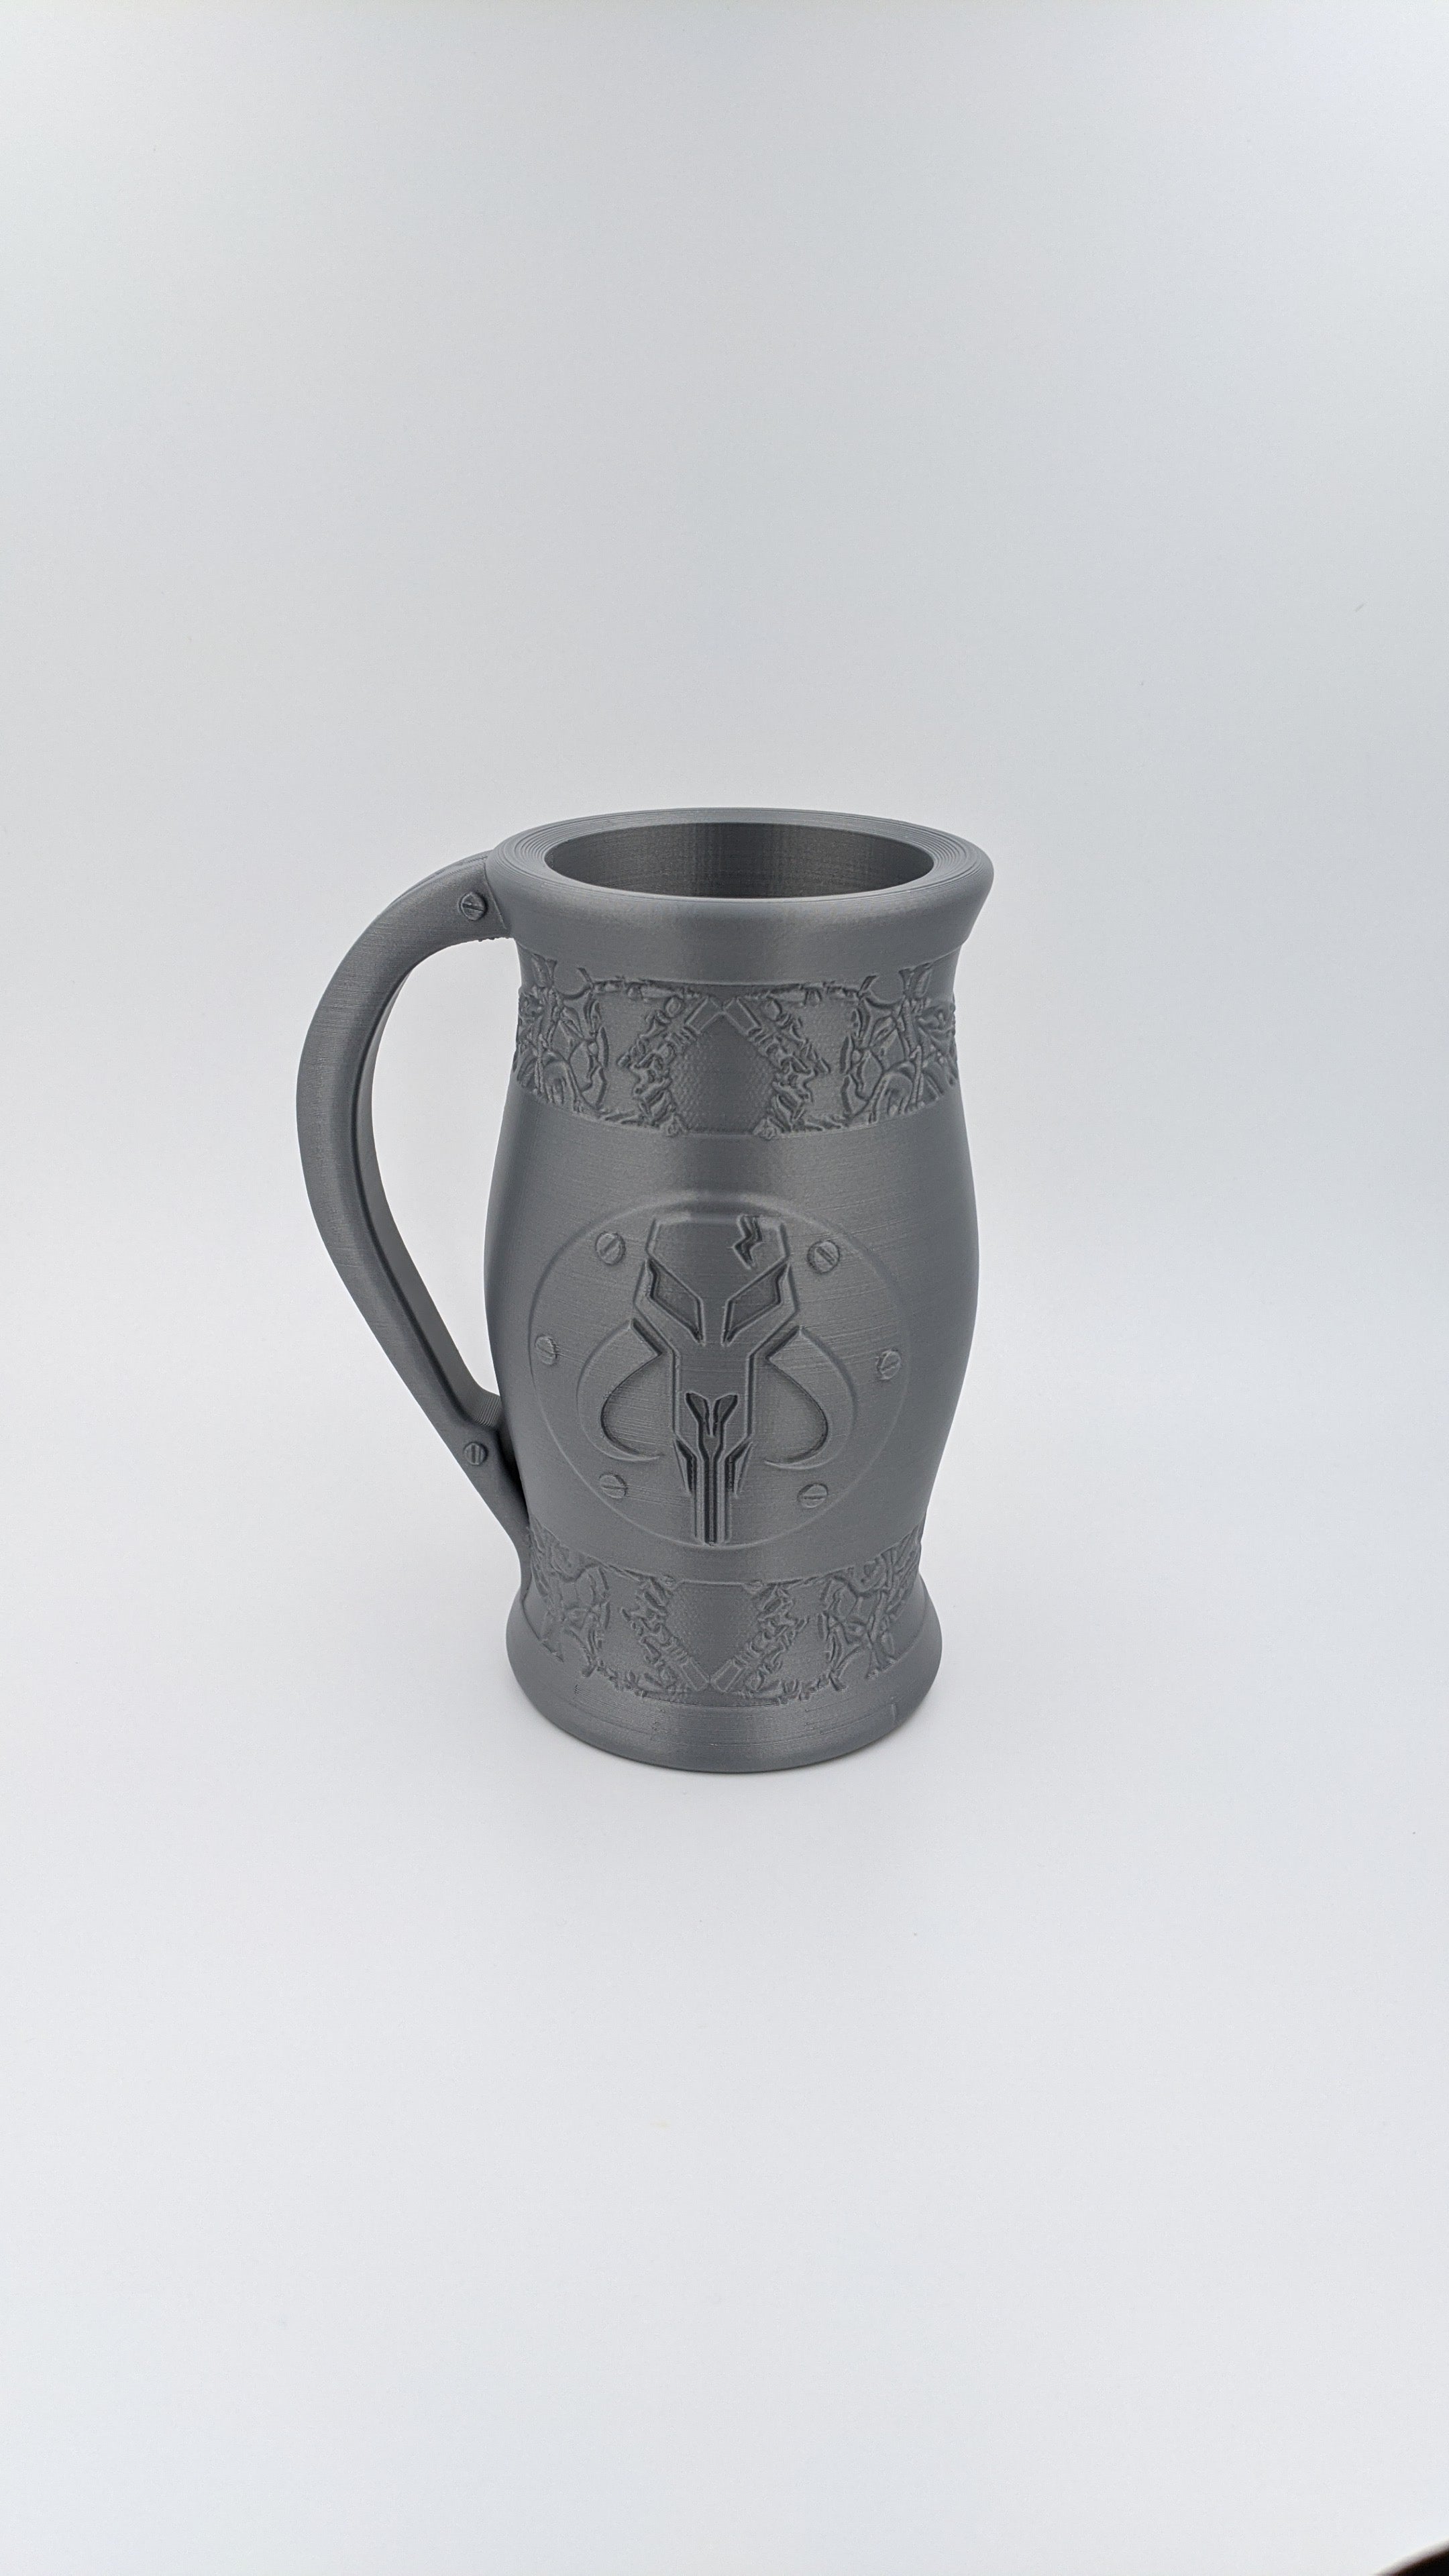 The Mandalorian Can Holder Mug